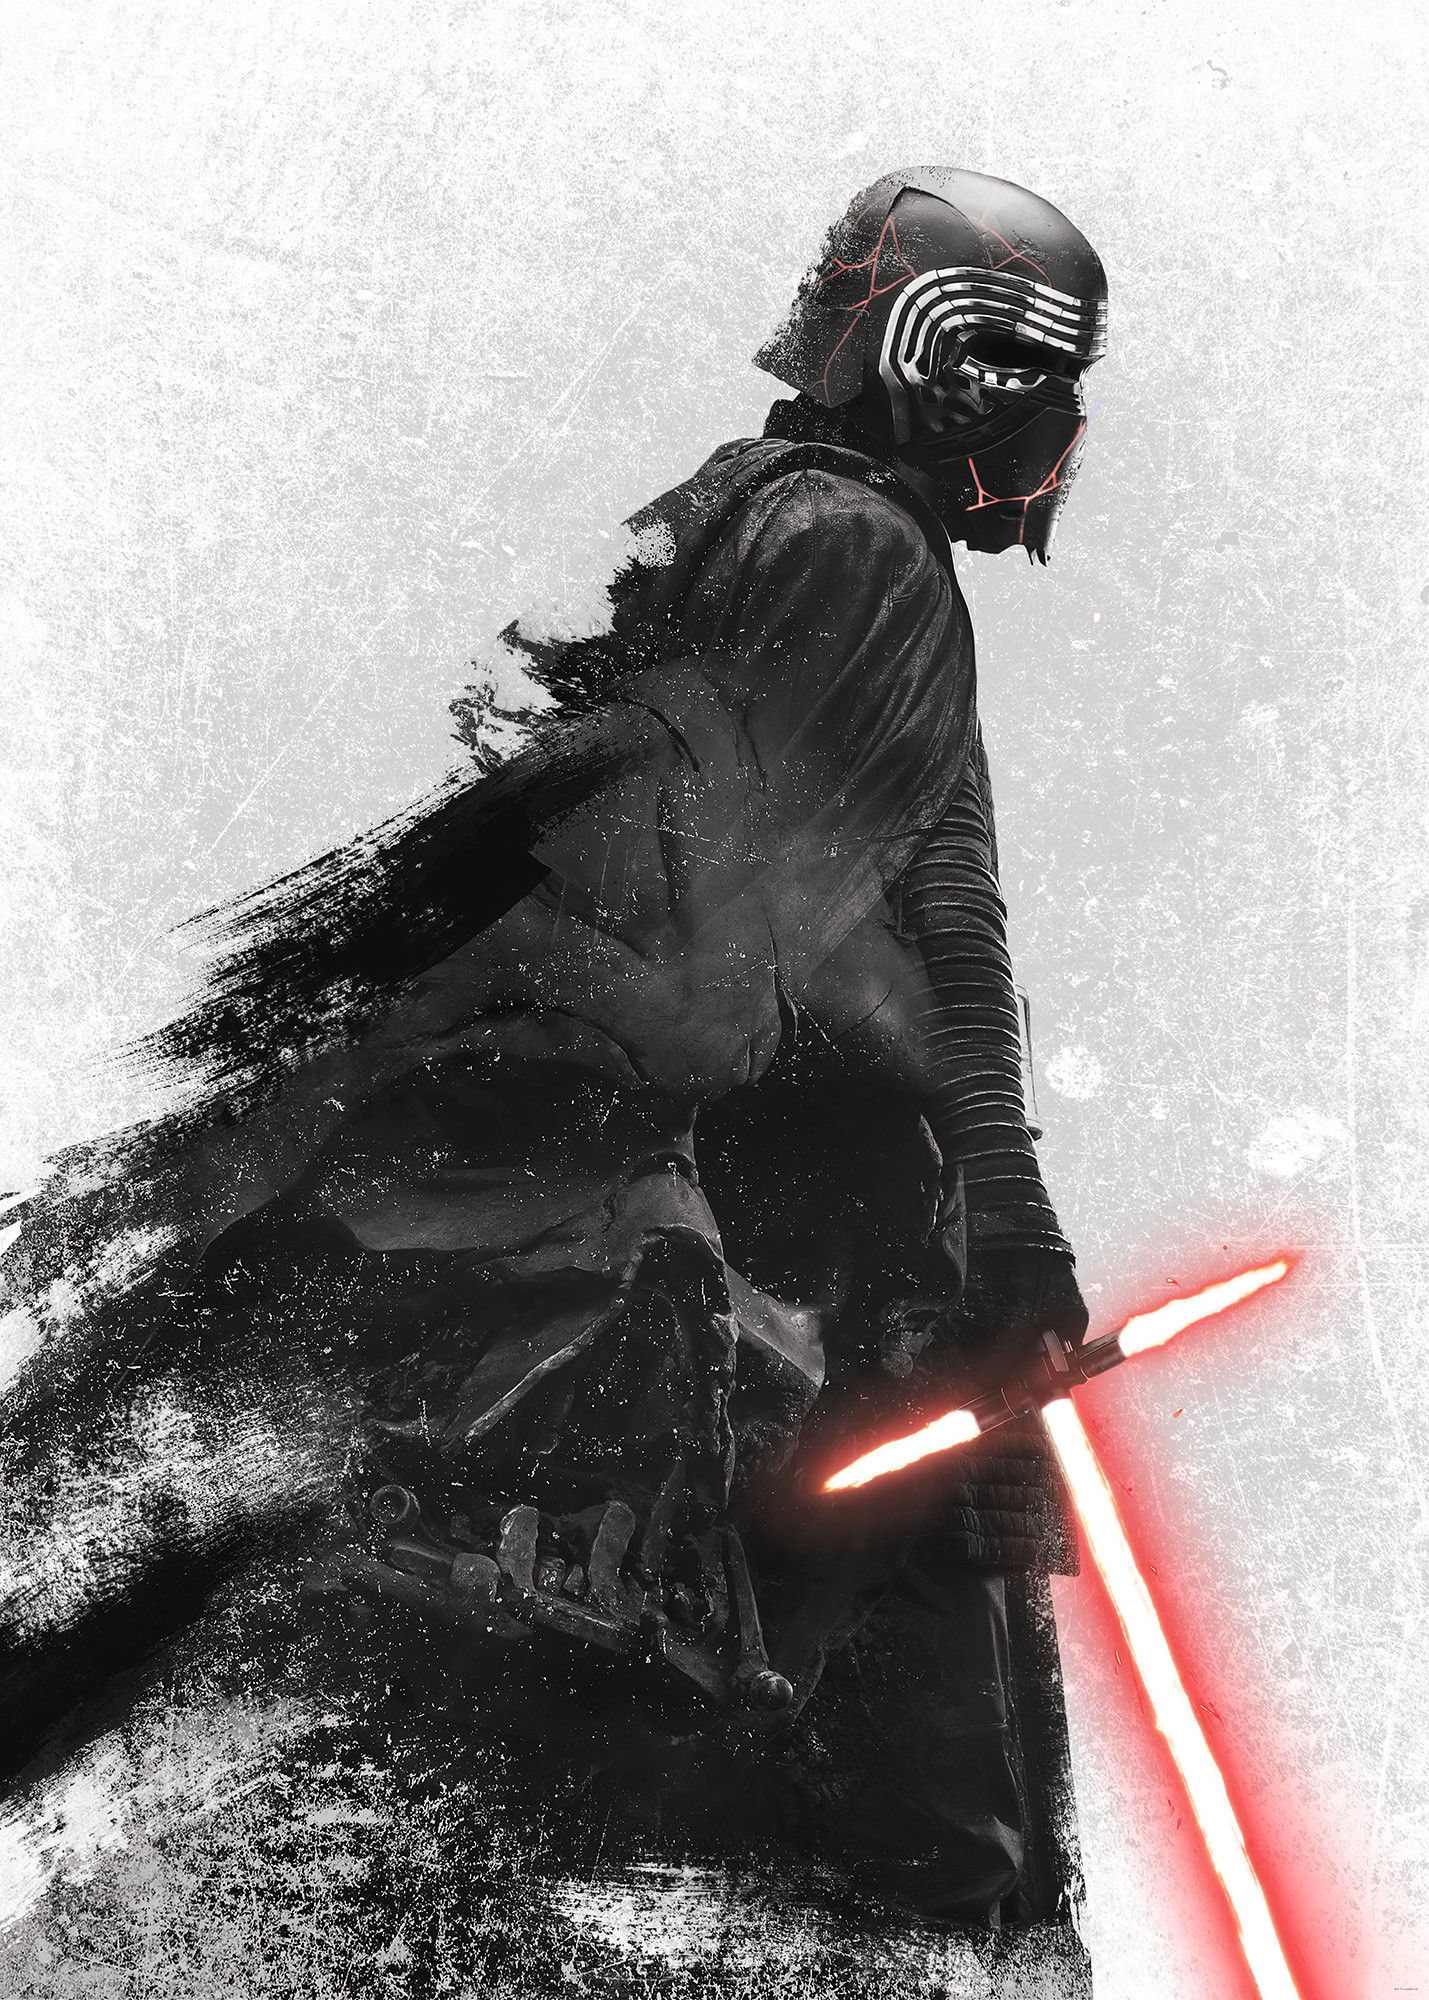 Poster XXL - impression numérique - Star Wars Forces Dark Vador - 200 cm -  280 cm